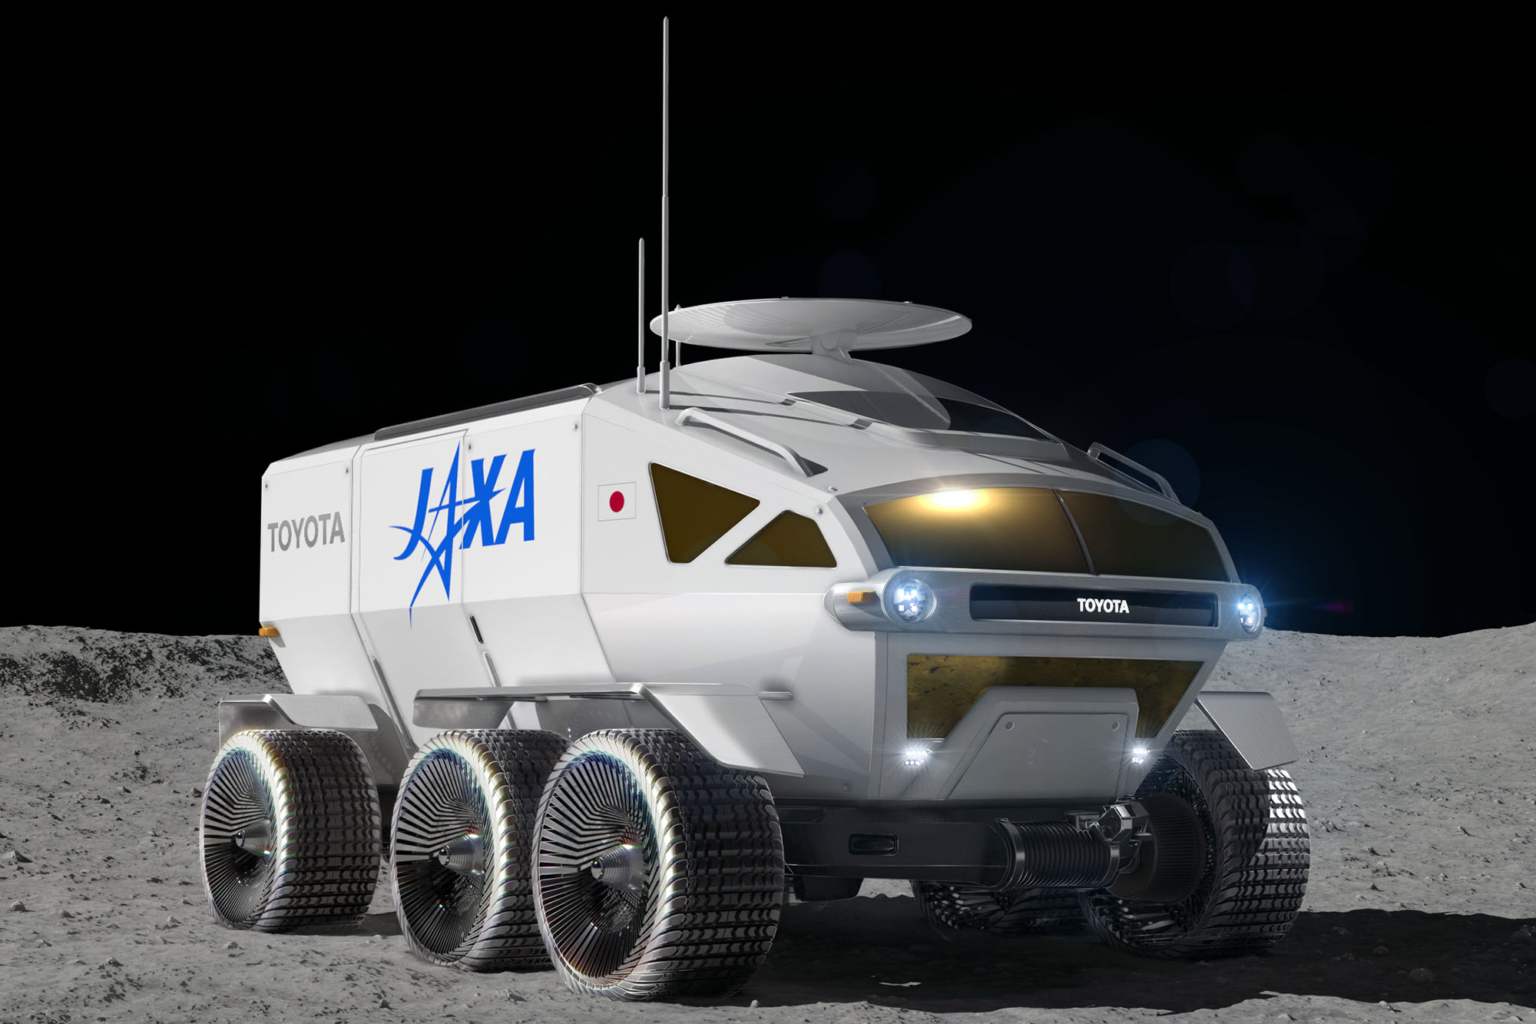 Meet the Lunar Cruiser: NASA Taps Toyota for Special Moon Build